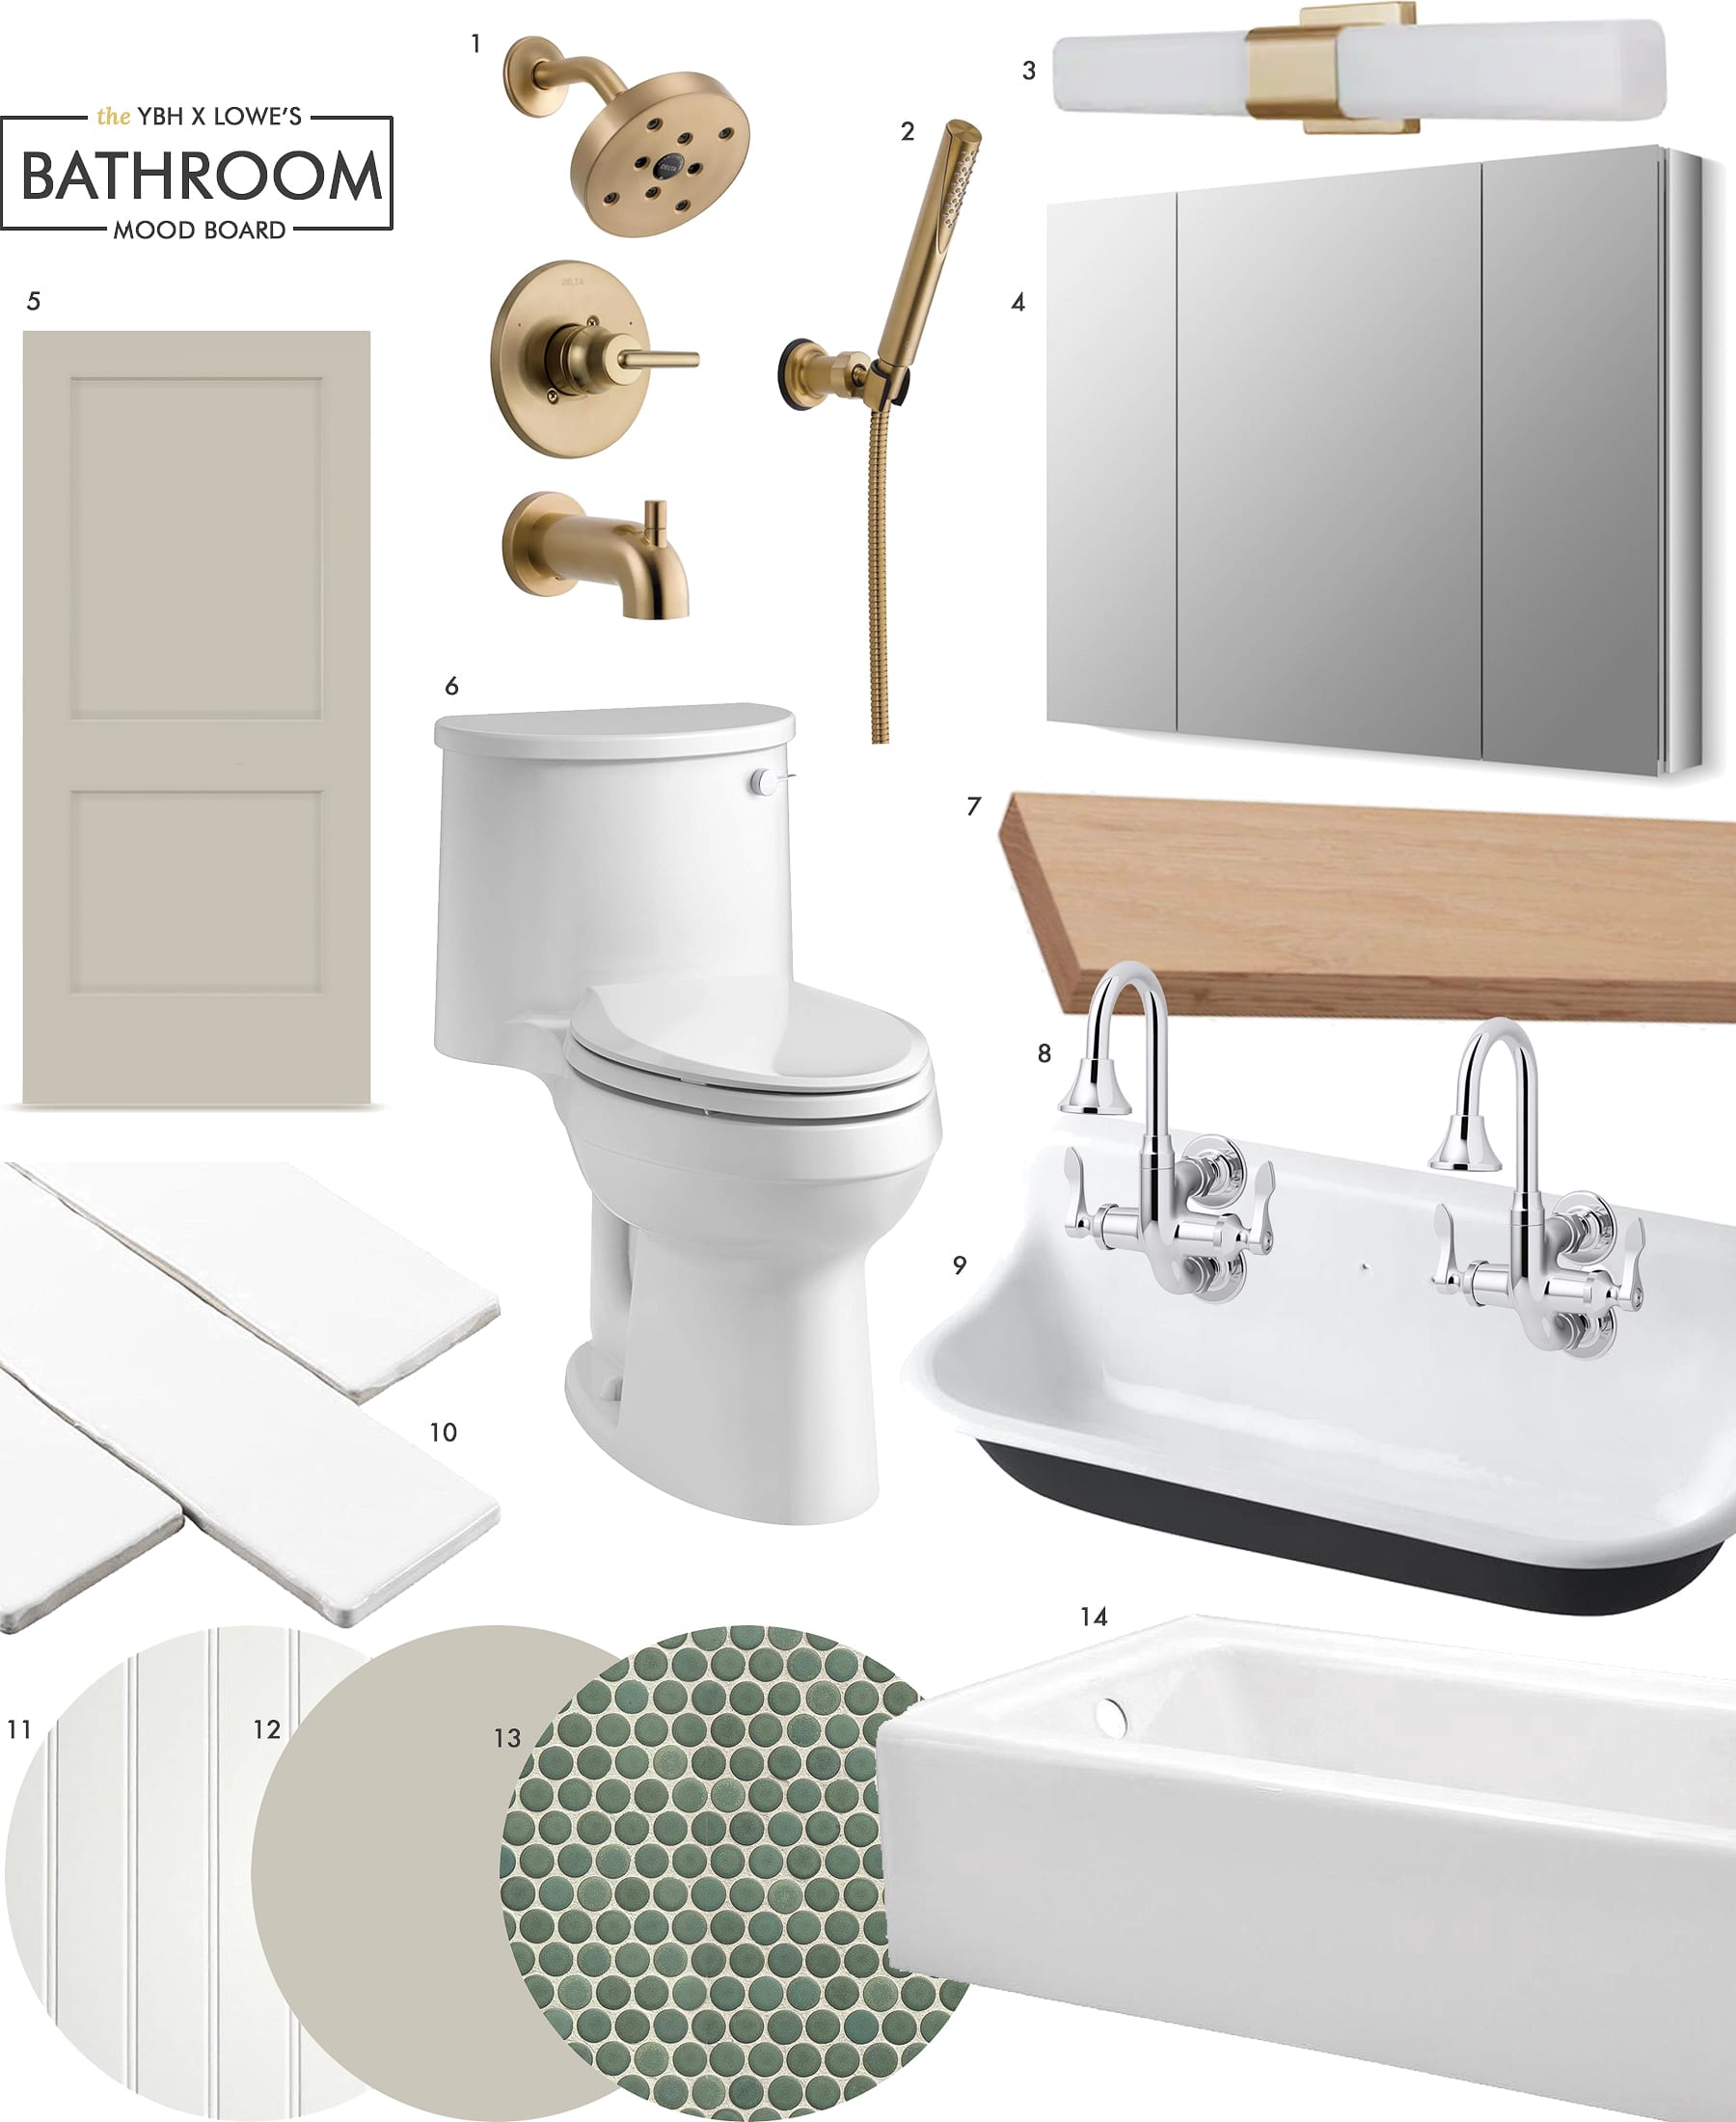 bathroom mood board for a white, black, brass and green design | via Yellow Brick Home